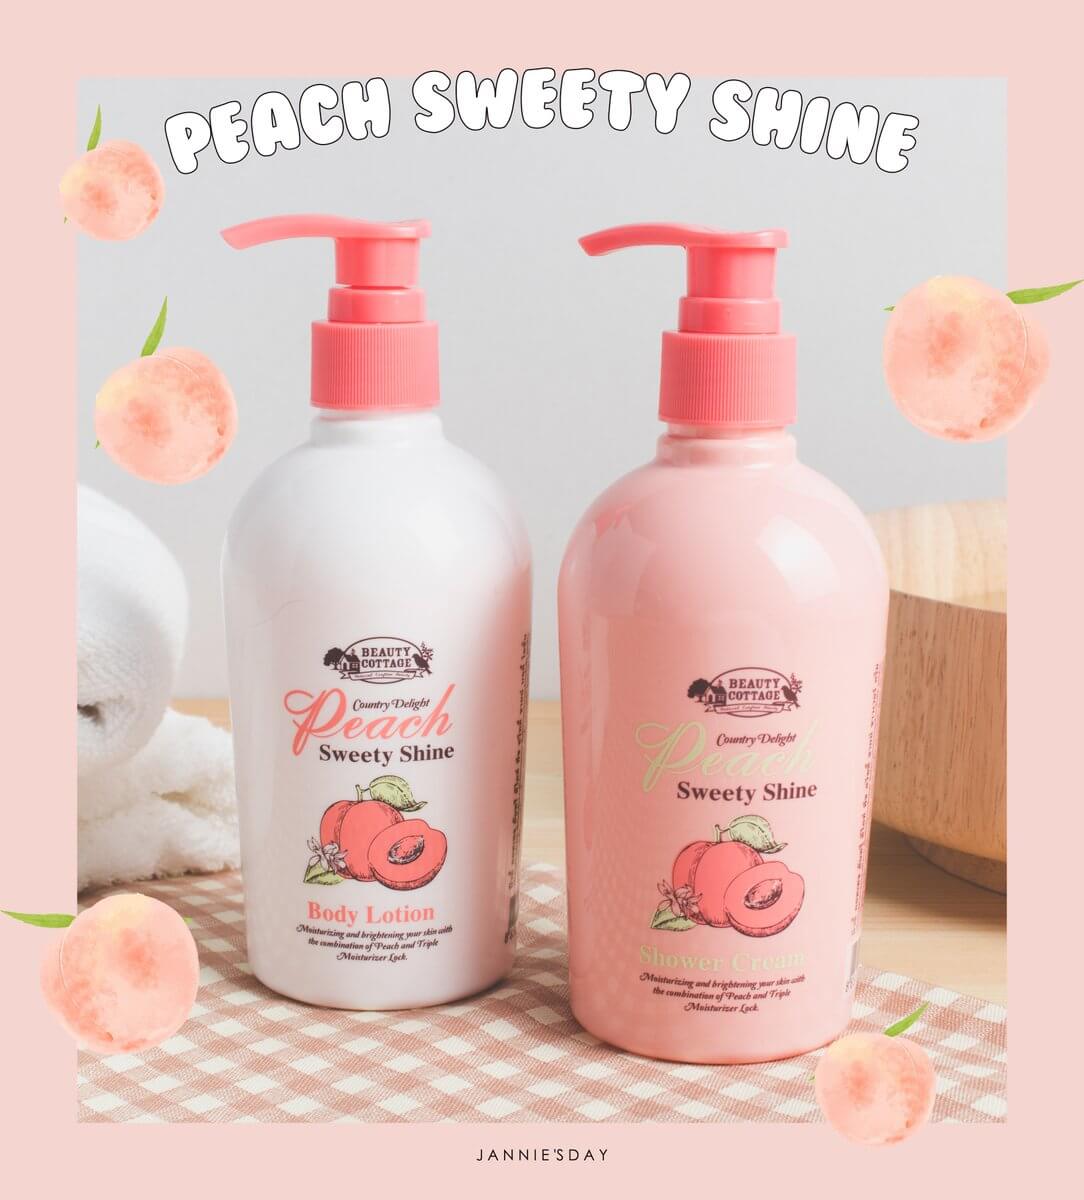 Beauty Cottage Country Delight Peach Sweety Shine Body Mist 100 g.  - สเปรย์น้ำหอมบำรุงผิวพีชเบอรี่ อัพผิวใส  - สารสกัด Stem Cell Peach, Grapefruit Extract และ Elastosome®CoQ10 พร้อม AHA ผลัดเซลล์ผิว บำรุงผิวให้ผิวแลดูสว่างกระจ่างใส   -  ไม่มีส่วนผสมของสารกันเสีย